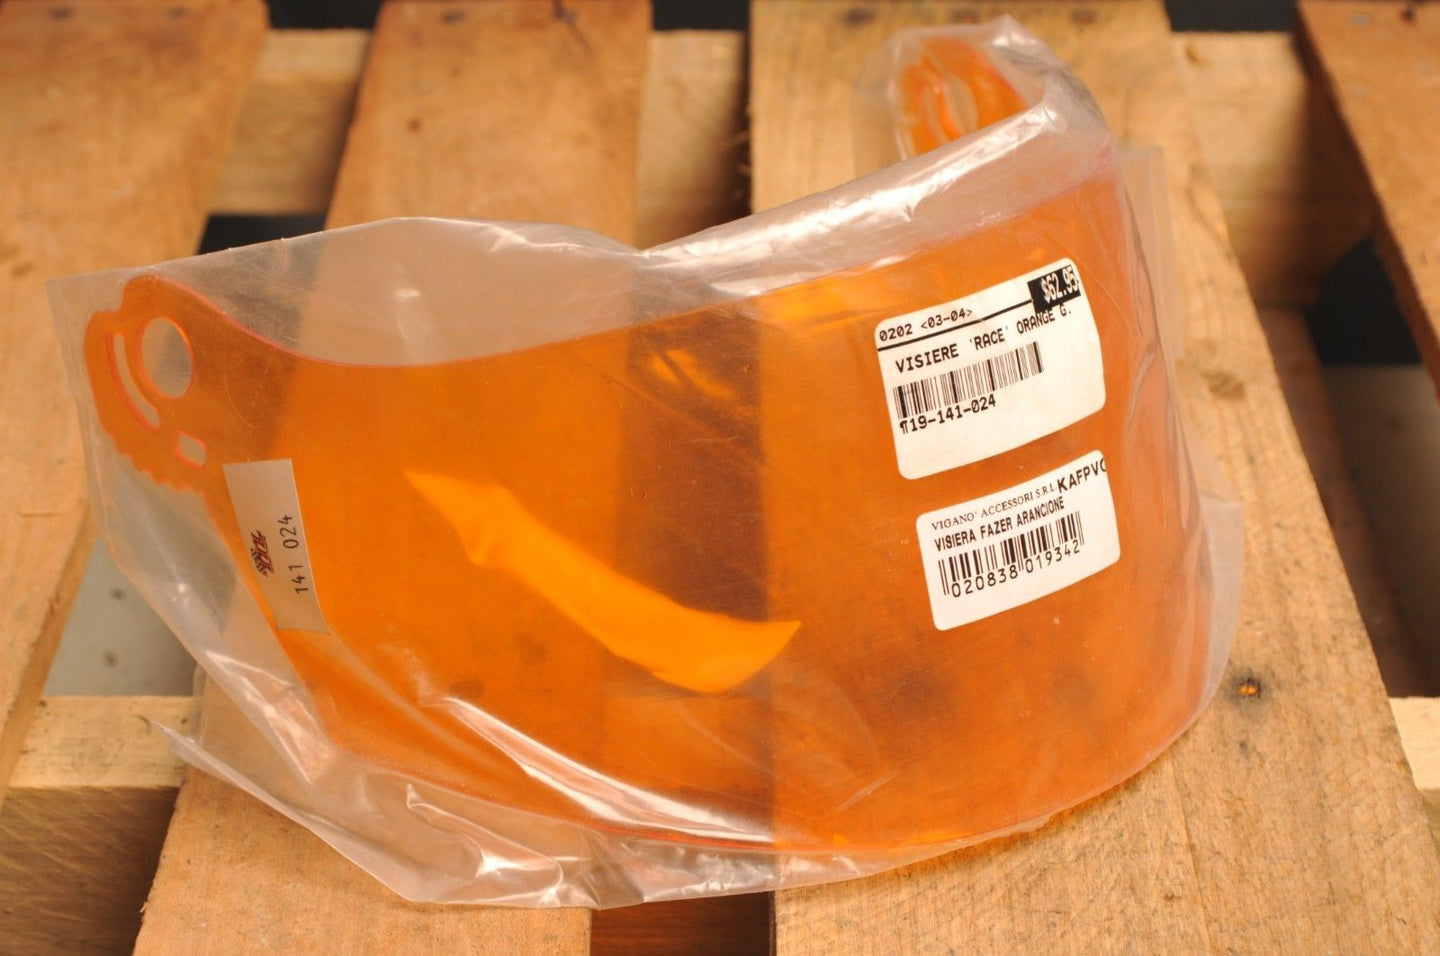 Genuine Suomy Motorcycle Helmet Visor/Shield KAFPVO Race Orange 141024 Fazer